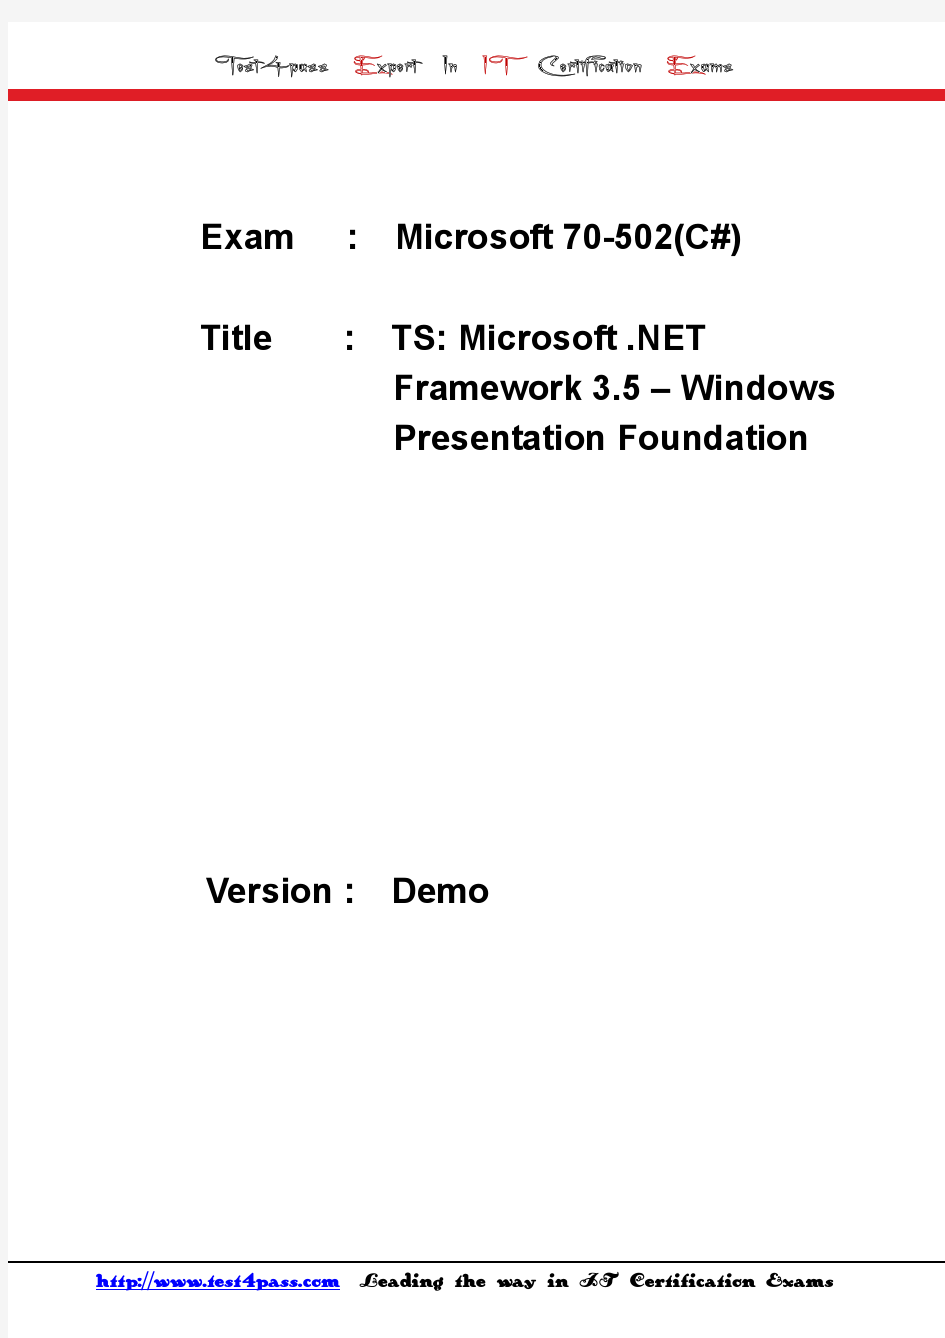 Test4pass Microsoft 70-502CSharp exam dumps questions answers